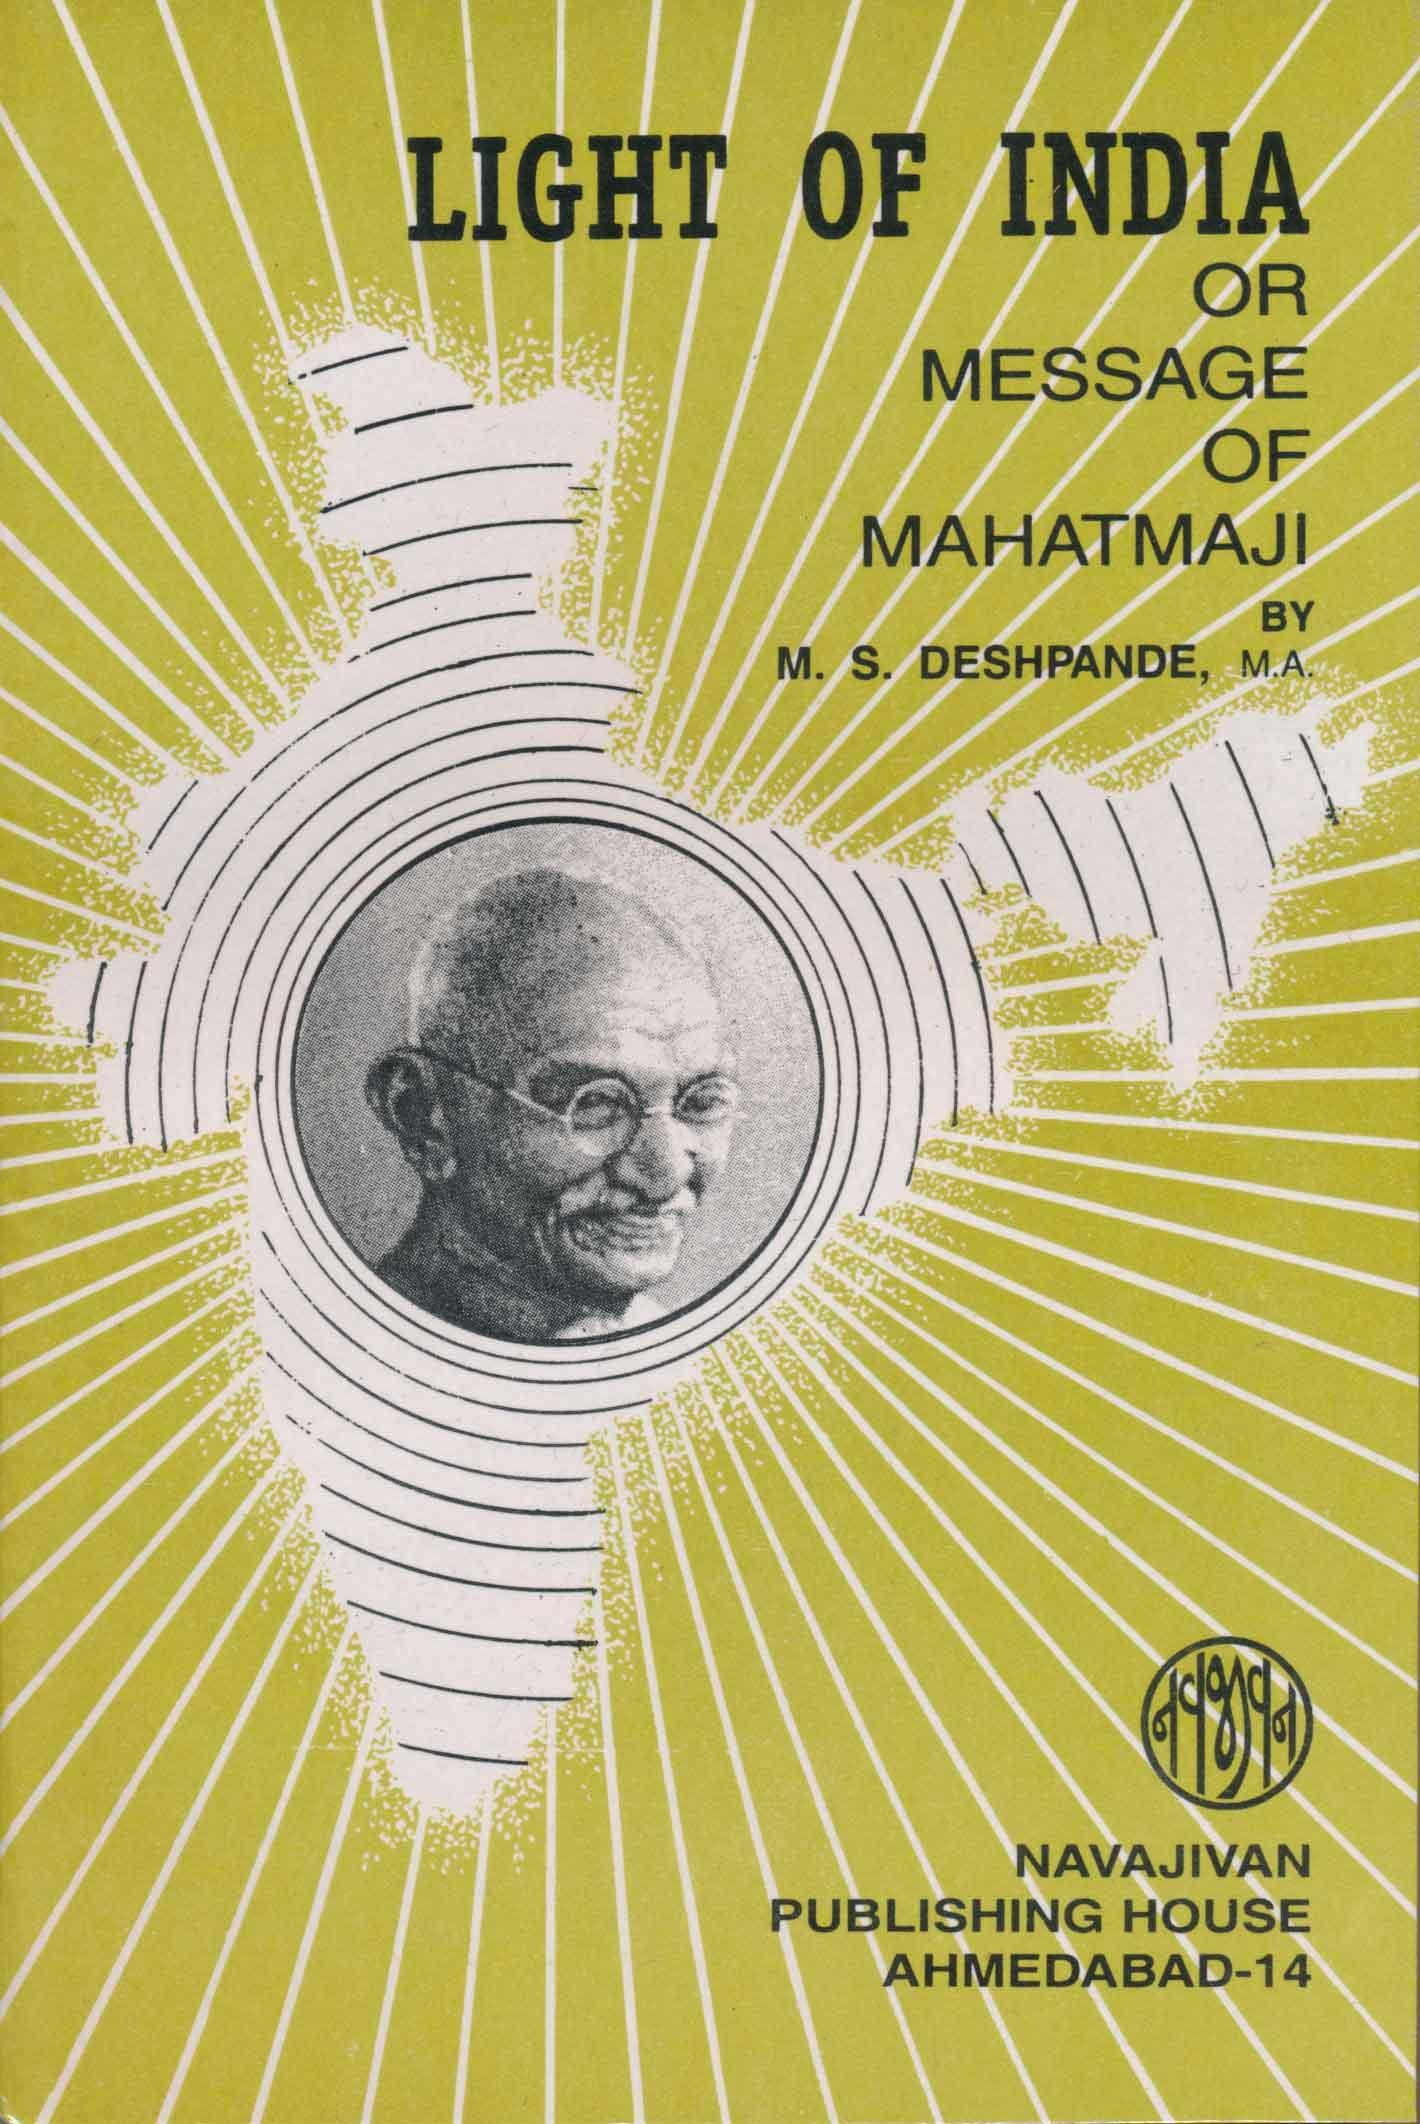 Light of India or Message of Mahatmaji